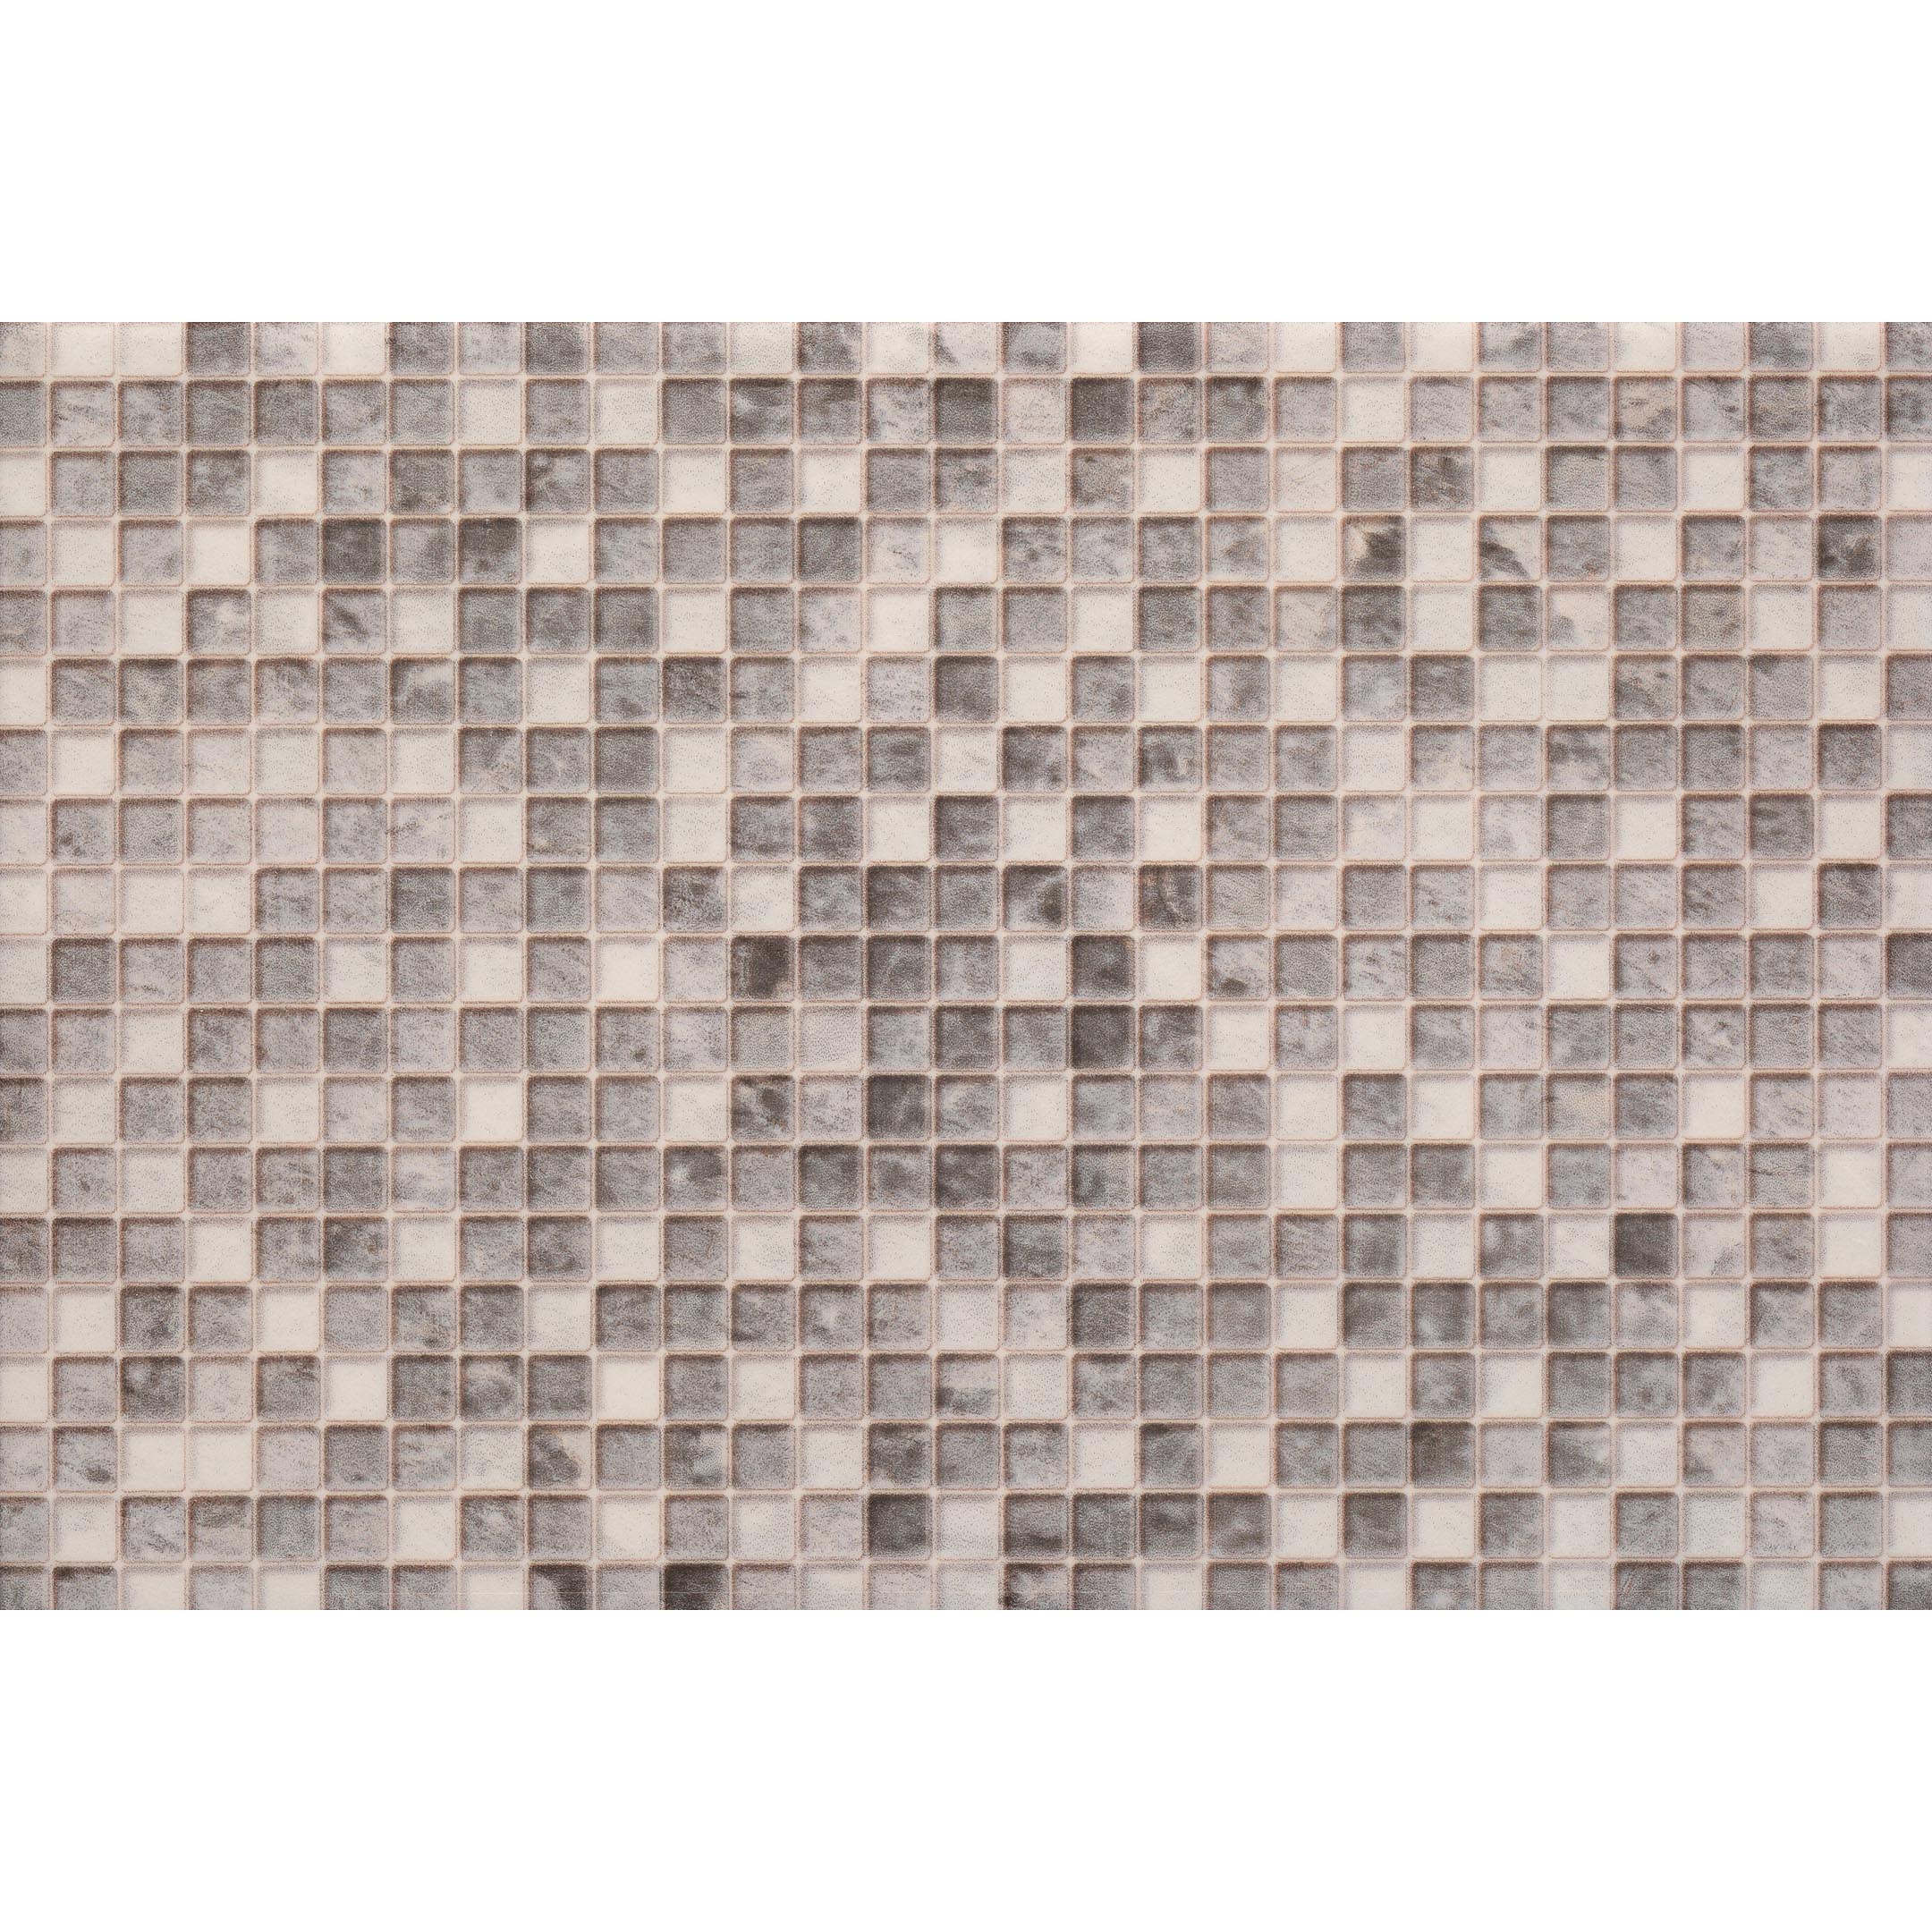 Плитка облицовочная Axima Мерида мозаика серый 300x200x7 мм (24 шт.=1,44 кв.м) от Петрович